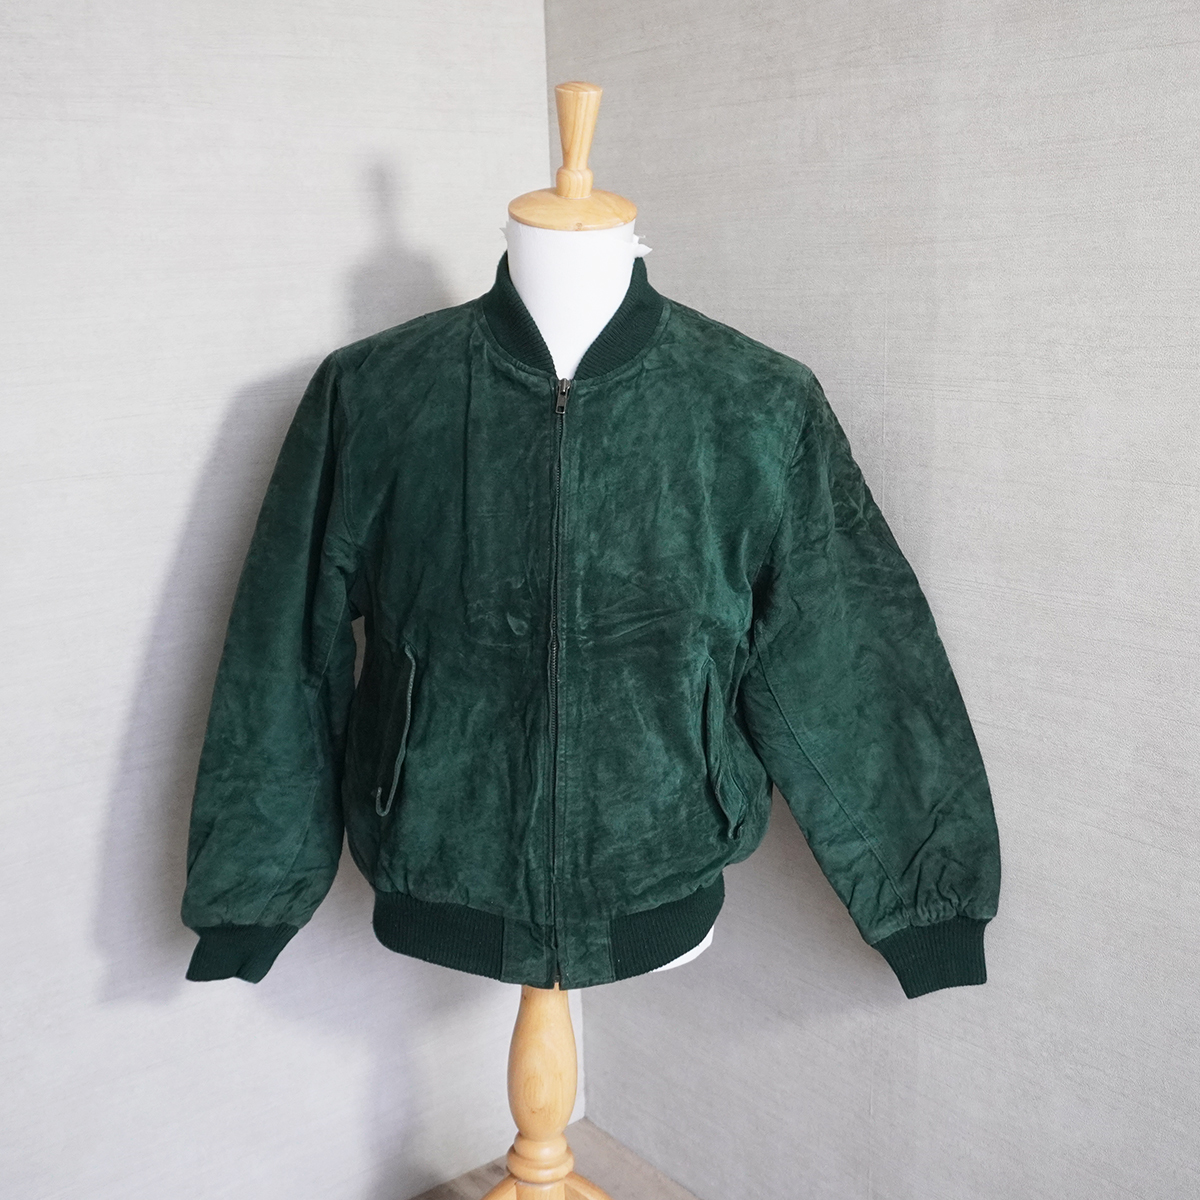  Mac Hope MAC HOPE Vintage original leather suede jacket men's L back s gold pig leather green green outer outer garment 